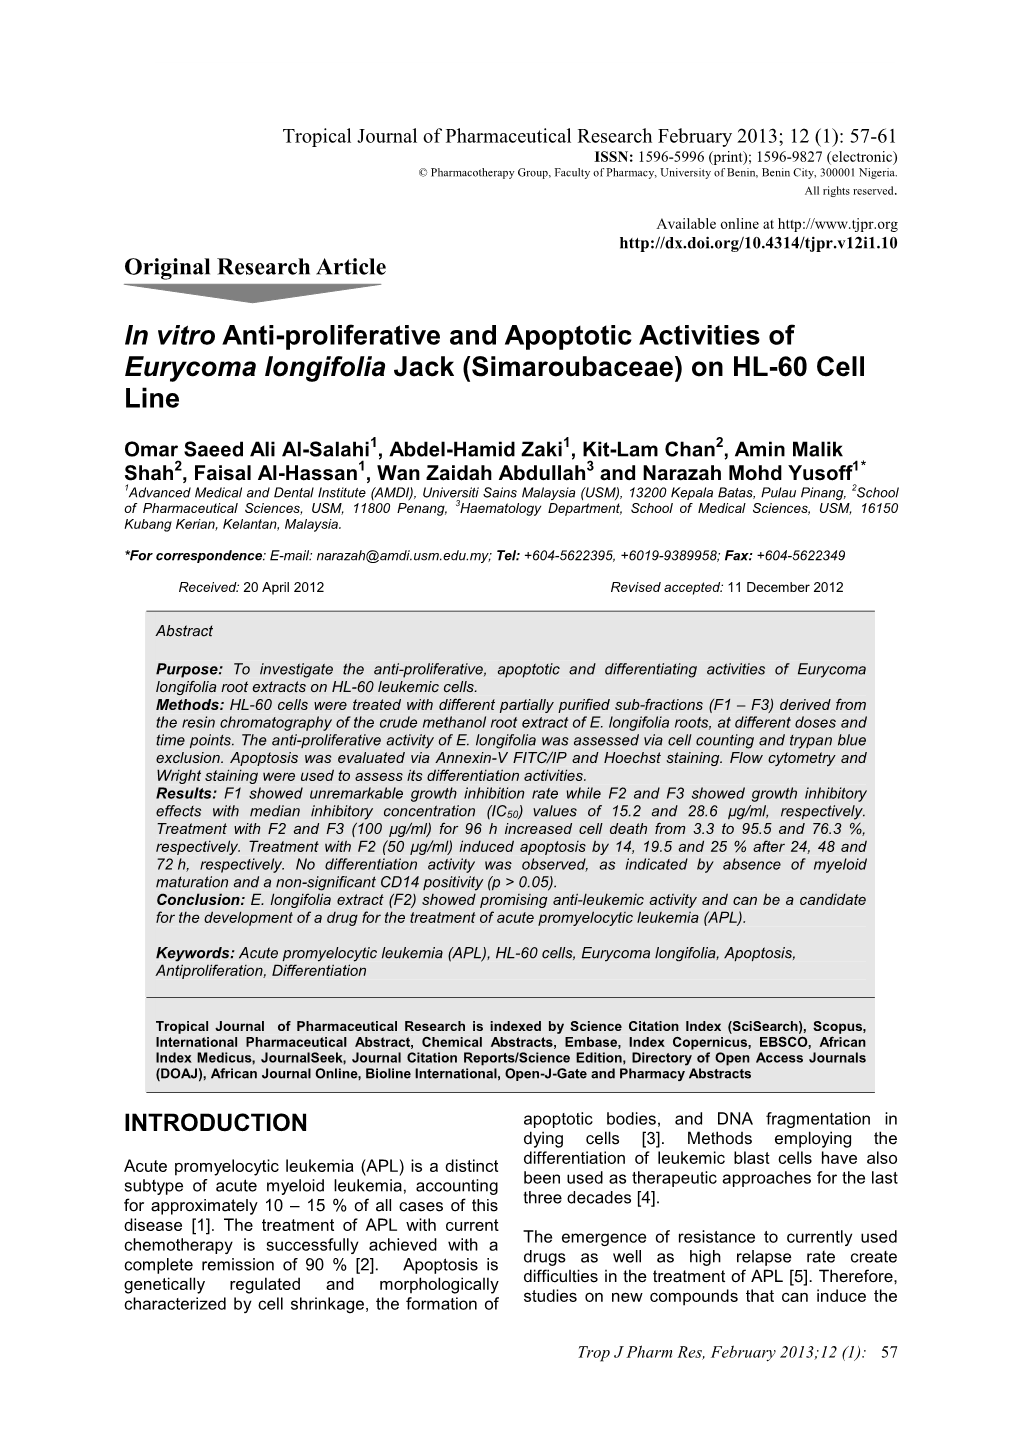 In Vitro Anti-Proliferative and Apoptotic Activities of Eurycoma Longifolia Jack (Simaroubaceae) on HL-60 Cell Line